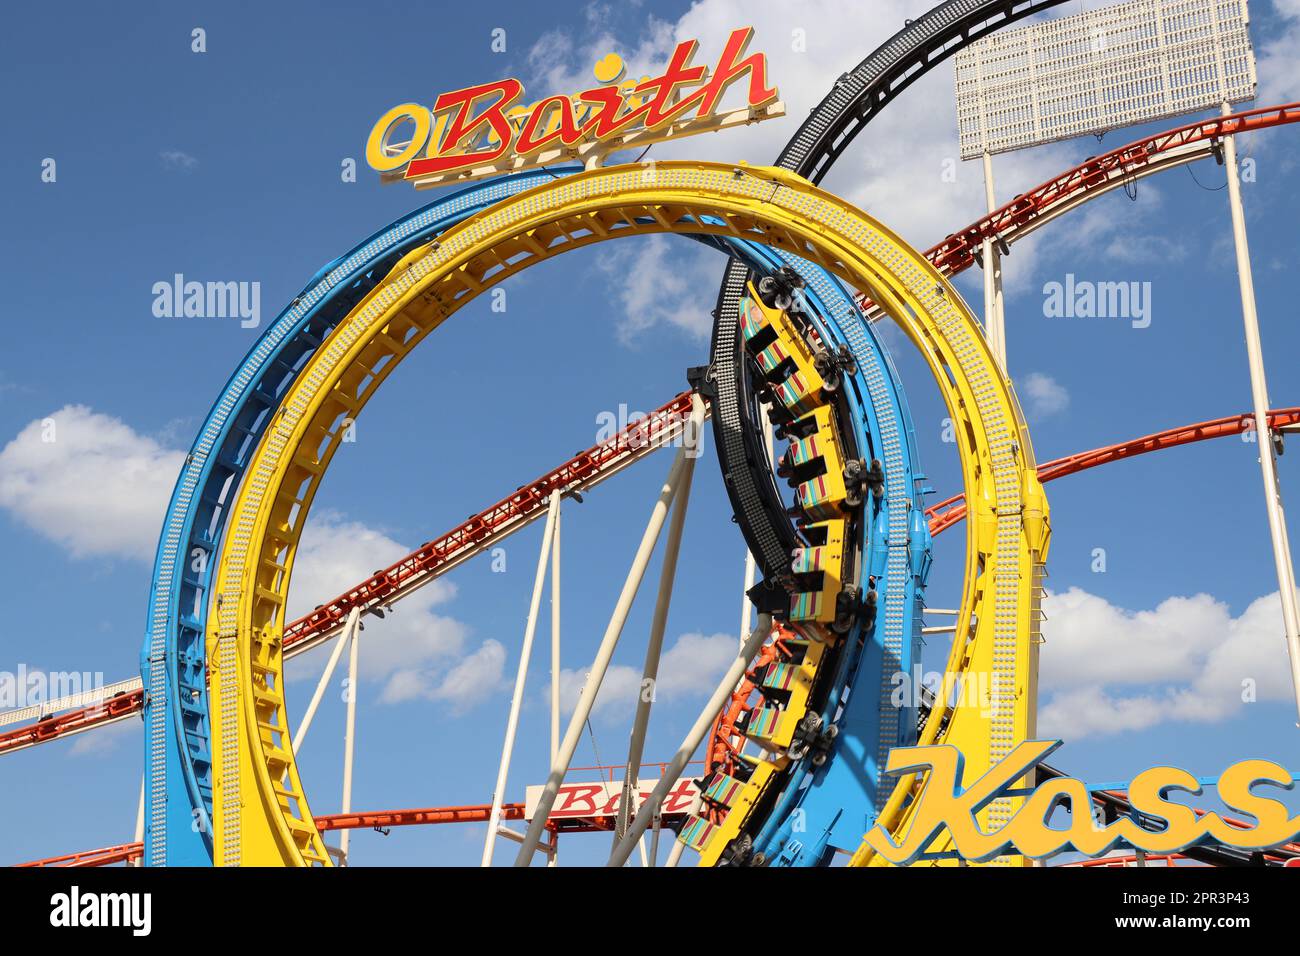 Olympia Looping at prater amusement park Vienna Stock Photo